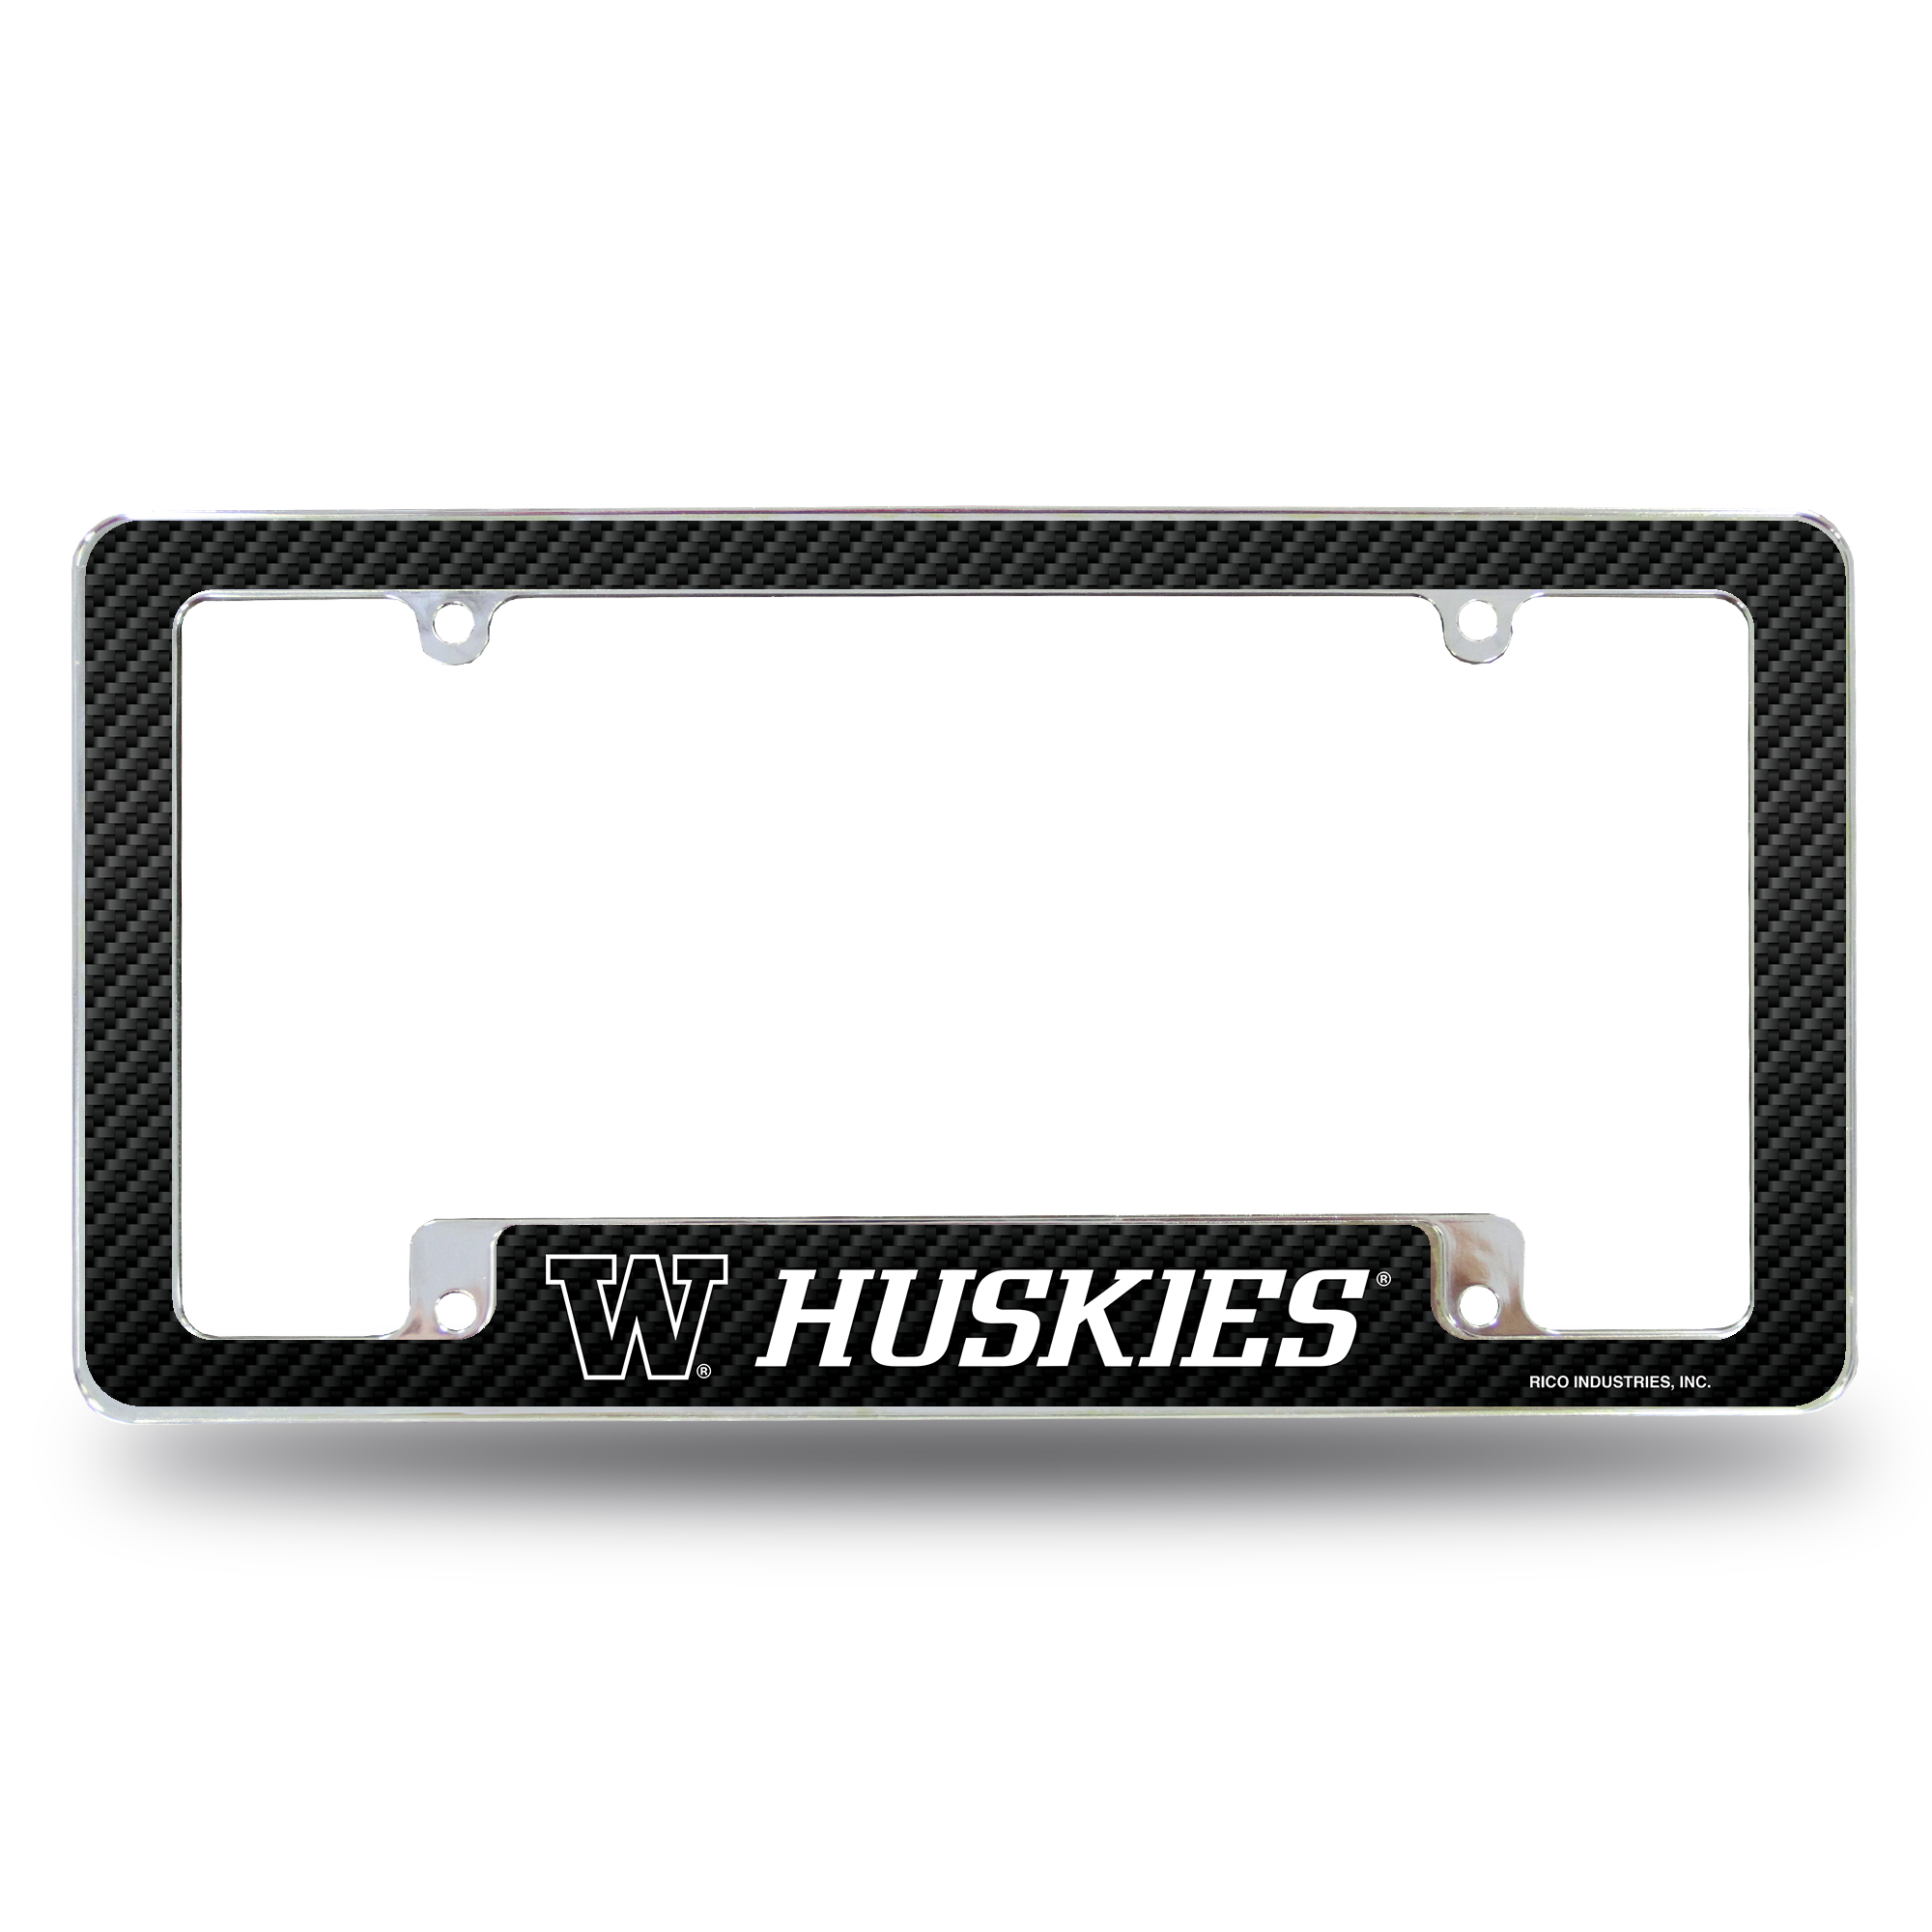 Washington NCAA Huskies Chrome Metal License Plate Frame with Carbon Fiber Design - image 1 of 10